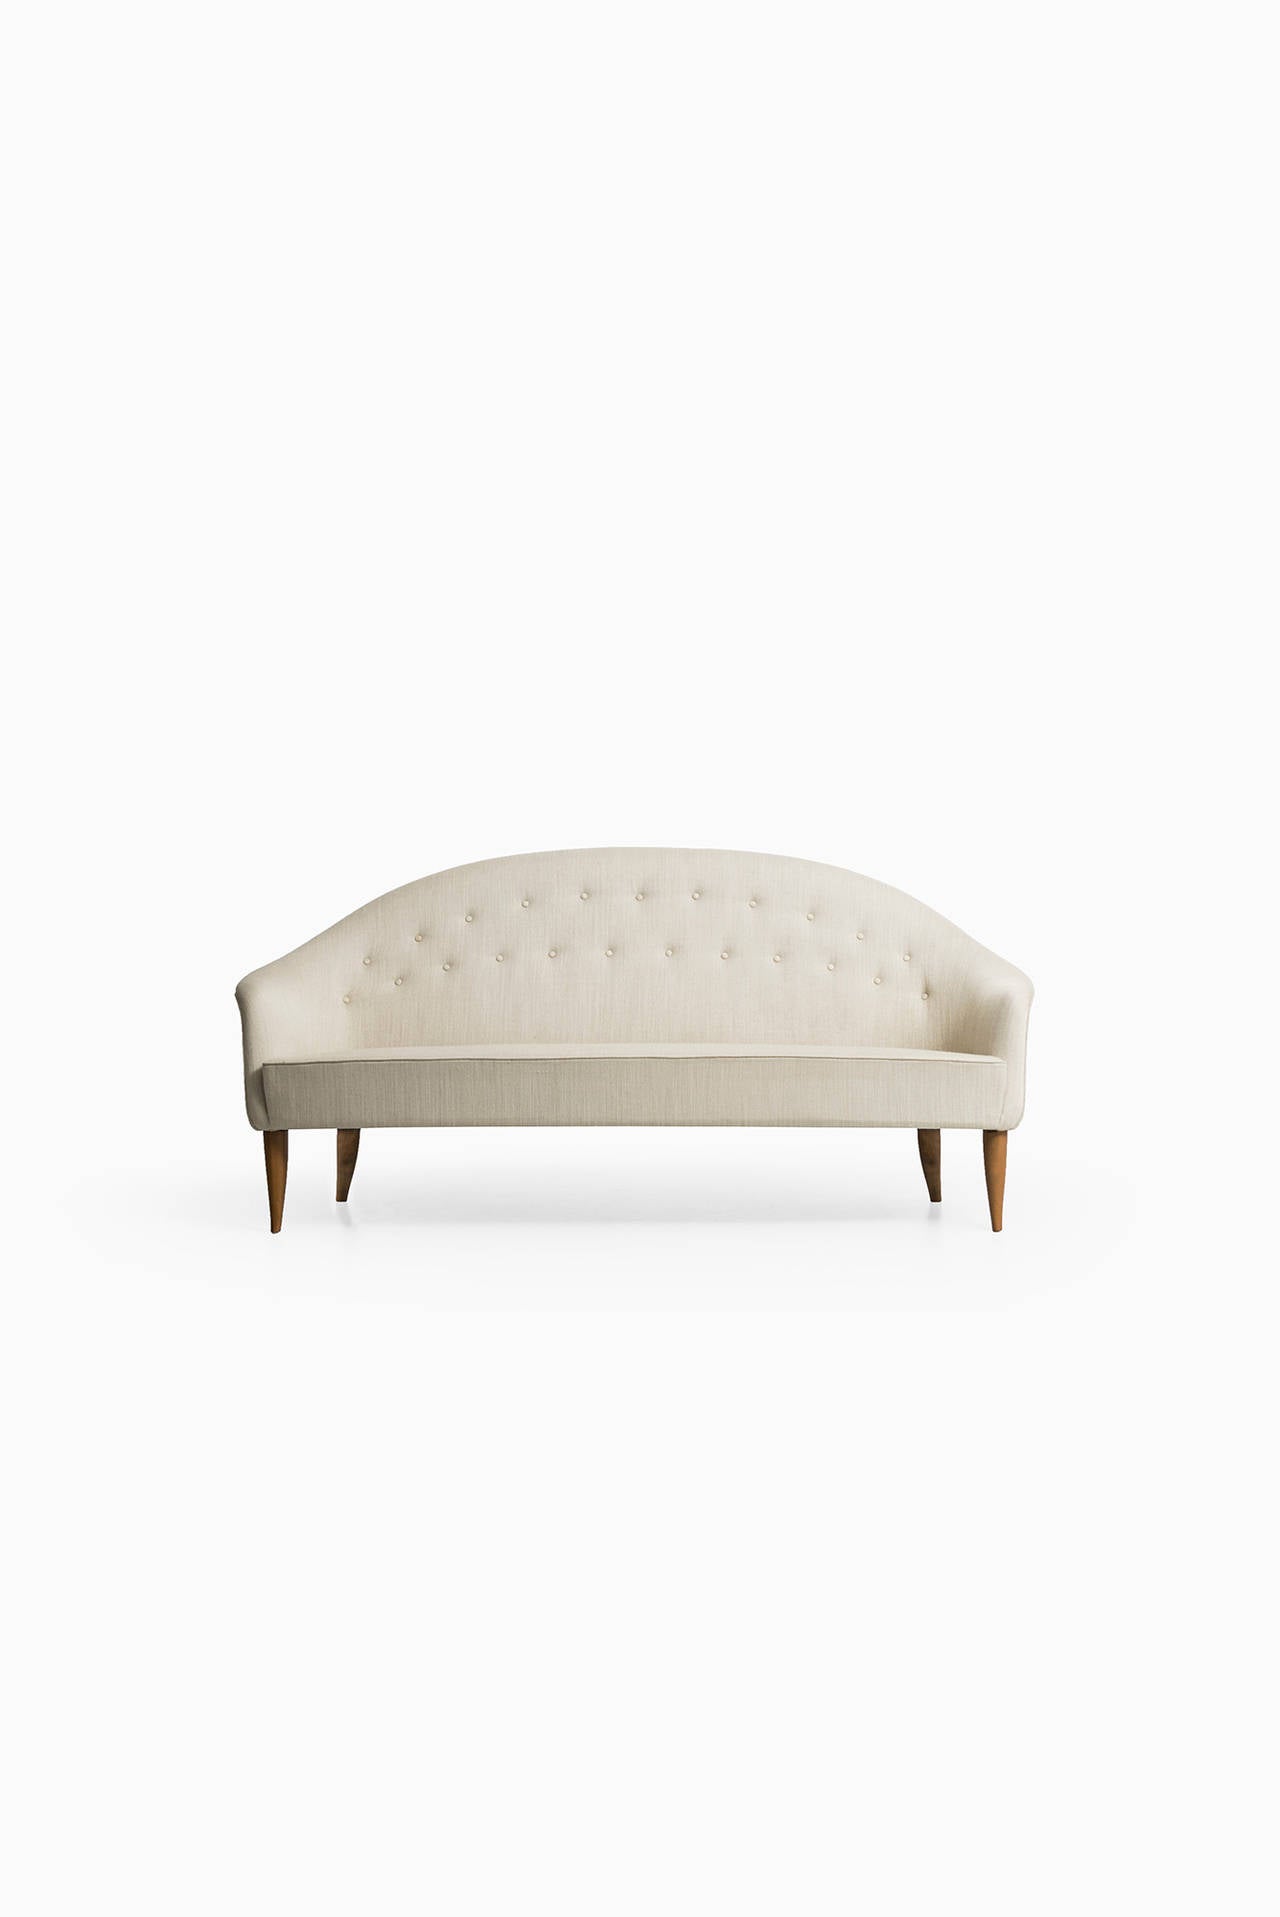 Sofa model Paradiset designed by Kerstin Hörlin-Holmquist. Produced by Nordiska Kompaniet in Sweden. Beech legs and original fabric.